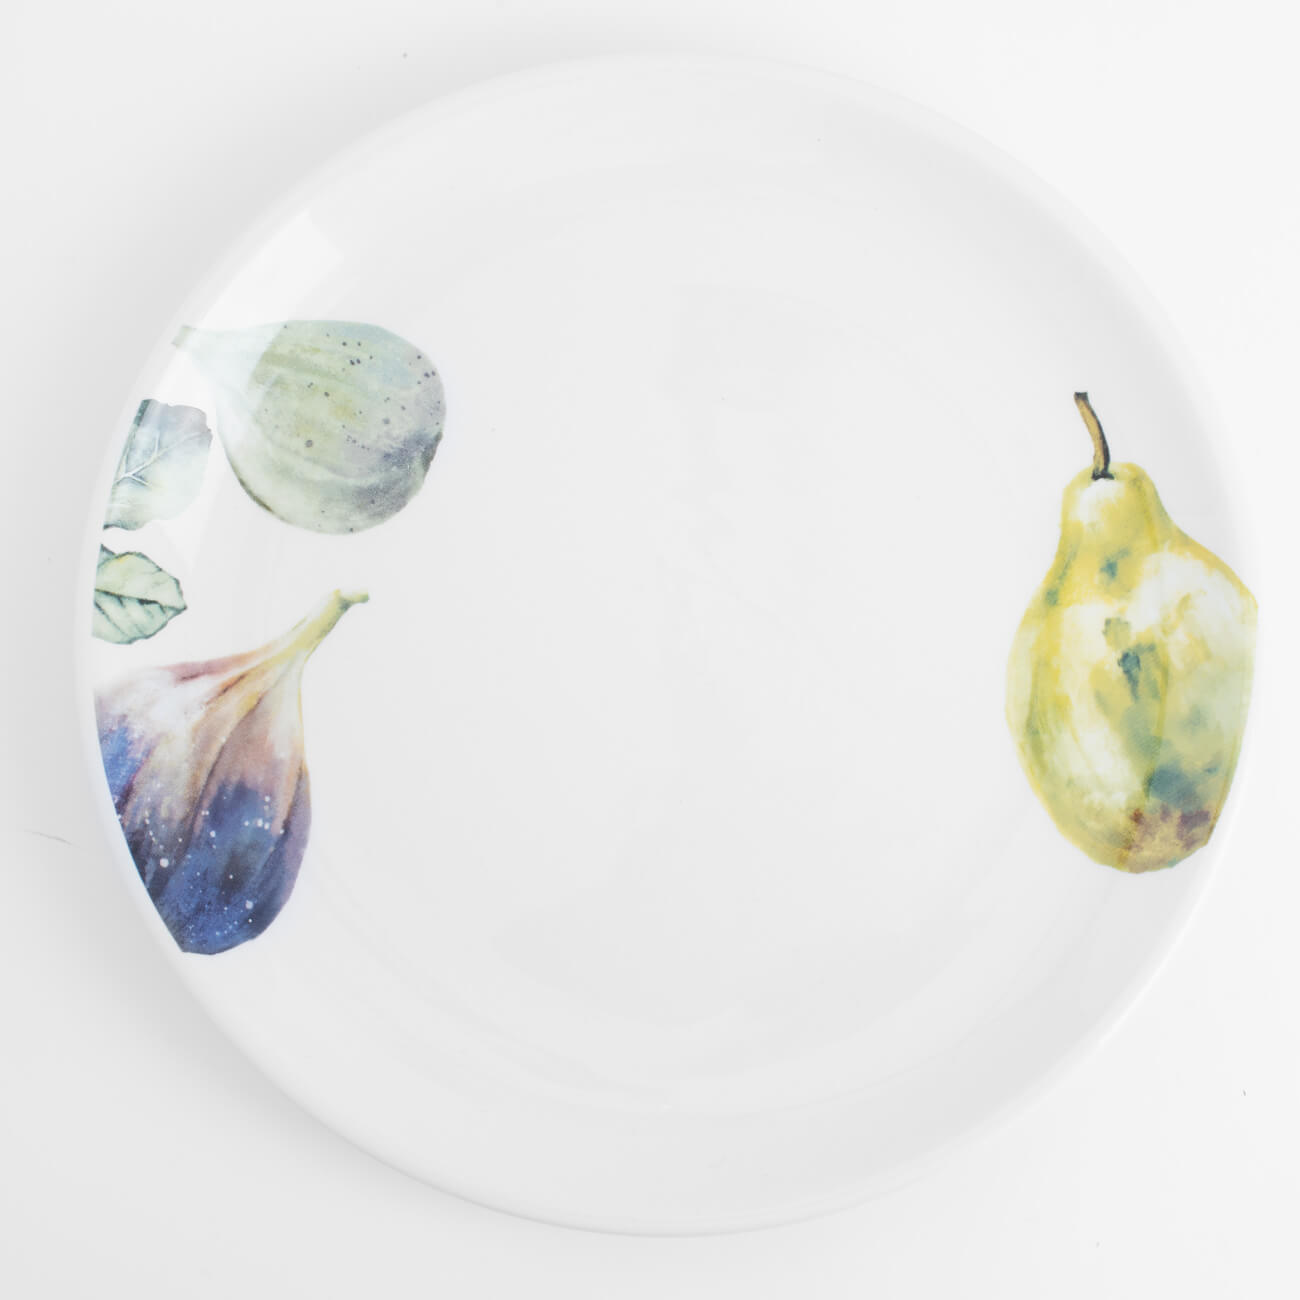 Тарелка закусочная, 21 см, керамика, белая, Инжир и груша, Fruit garden тарелка zdk